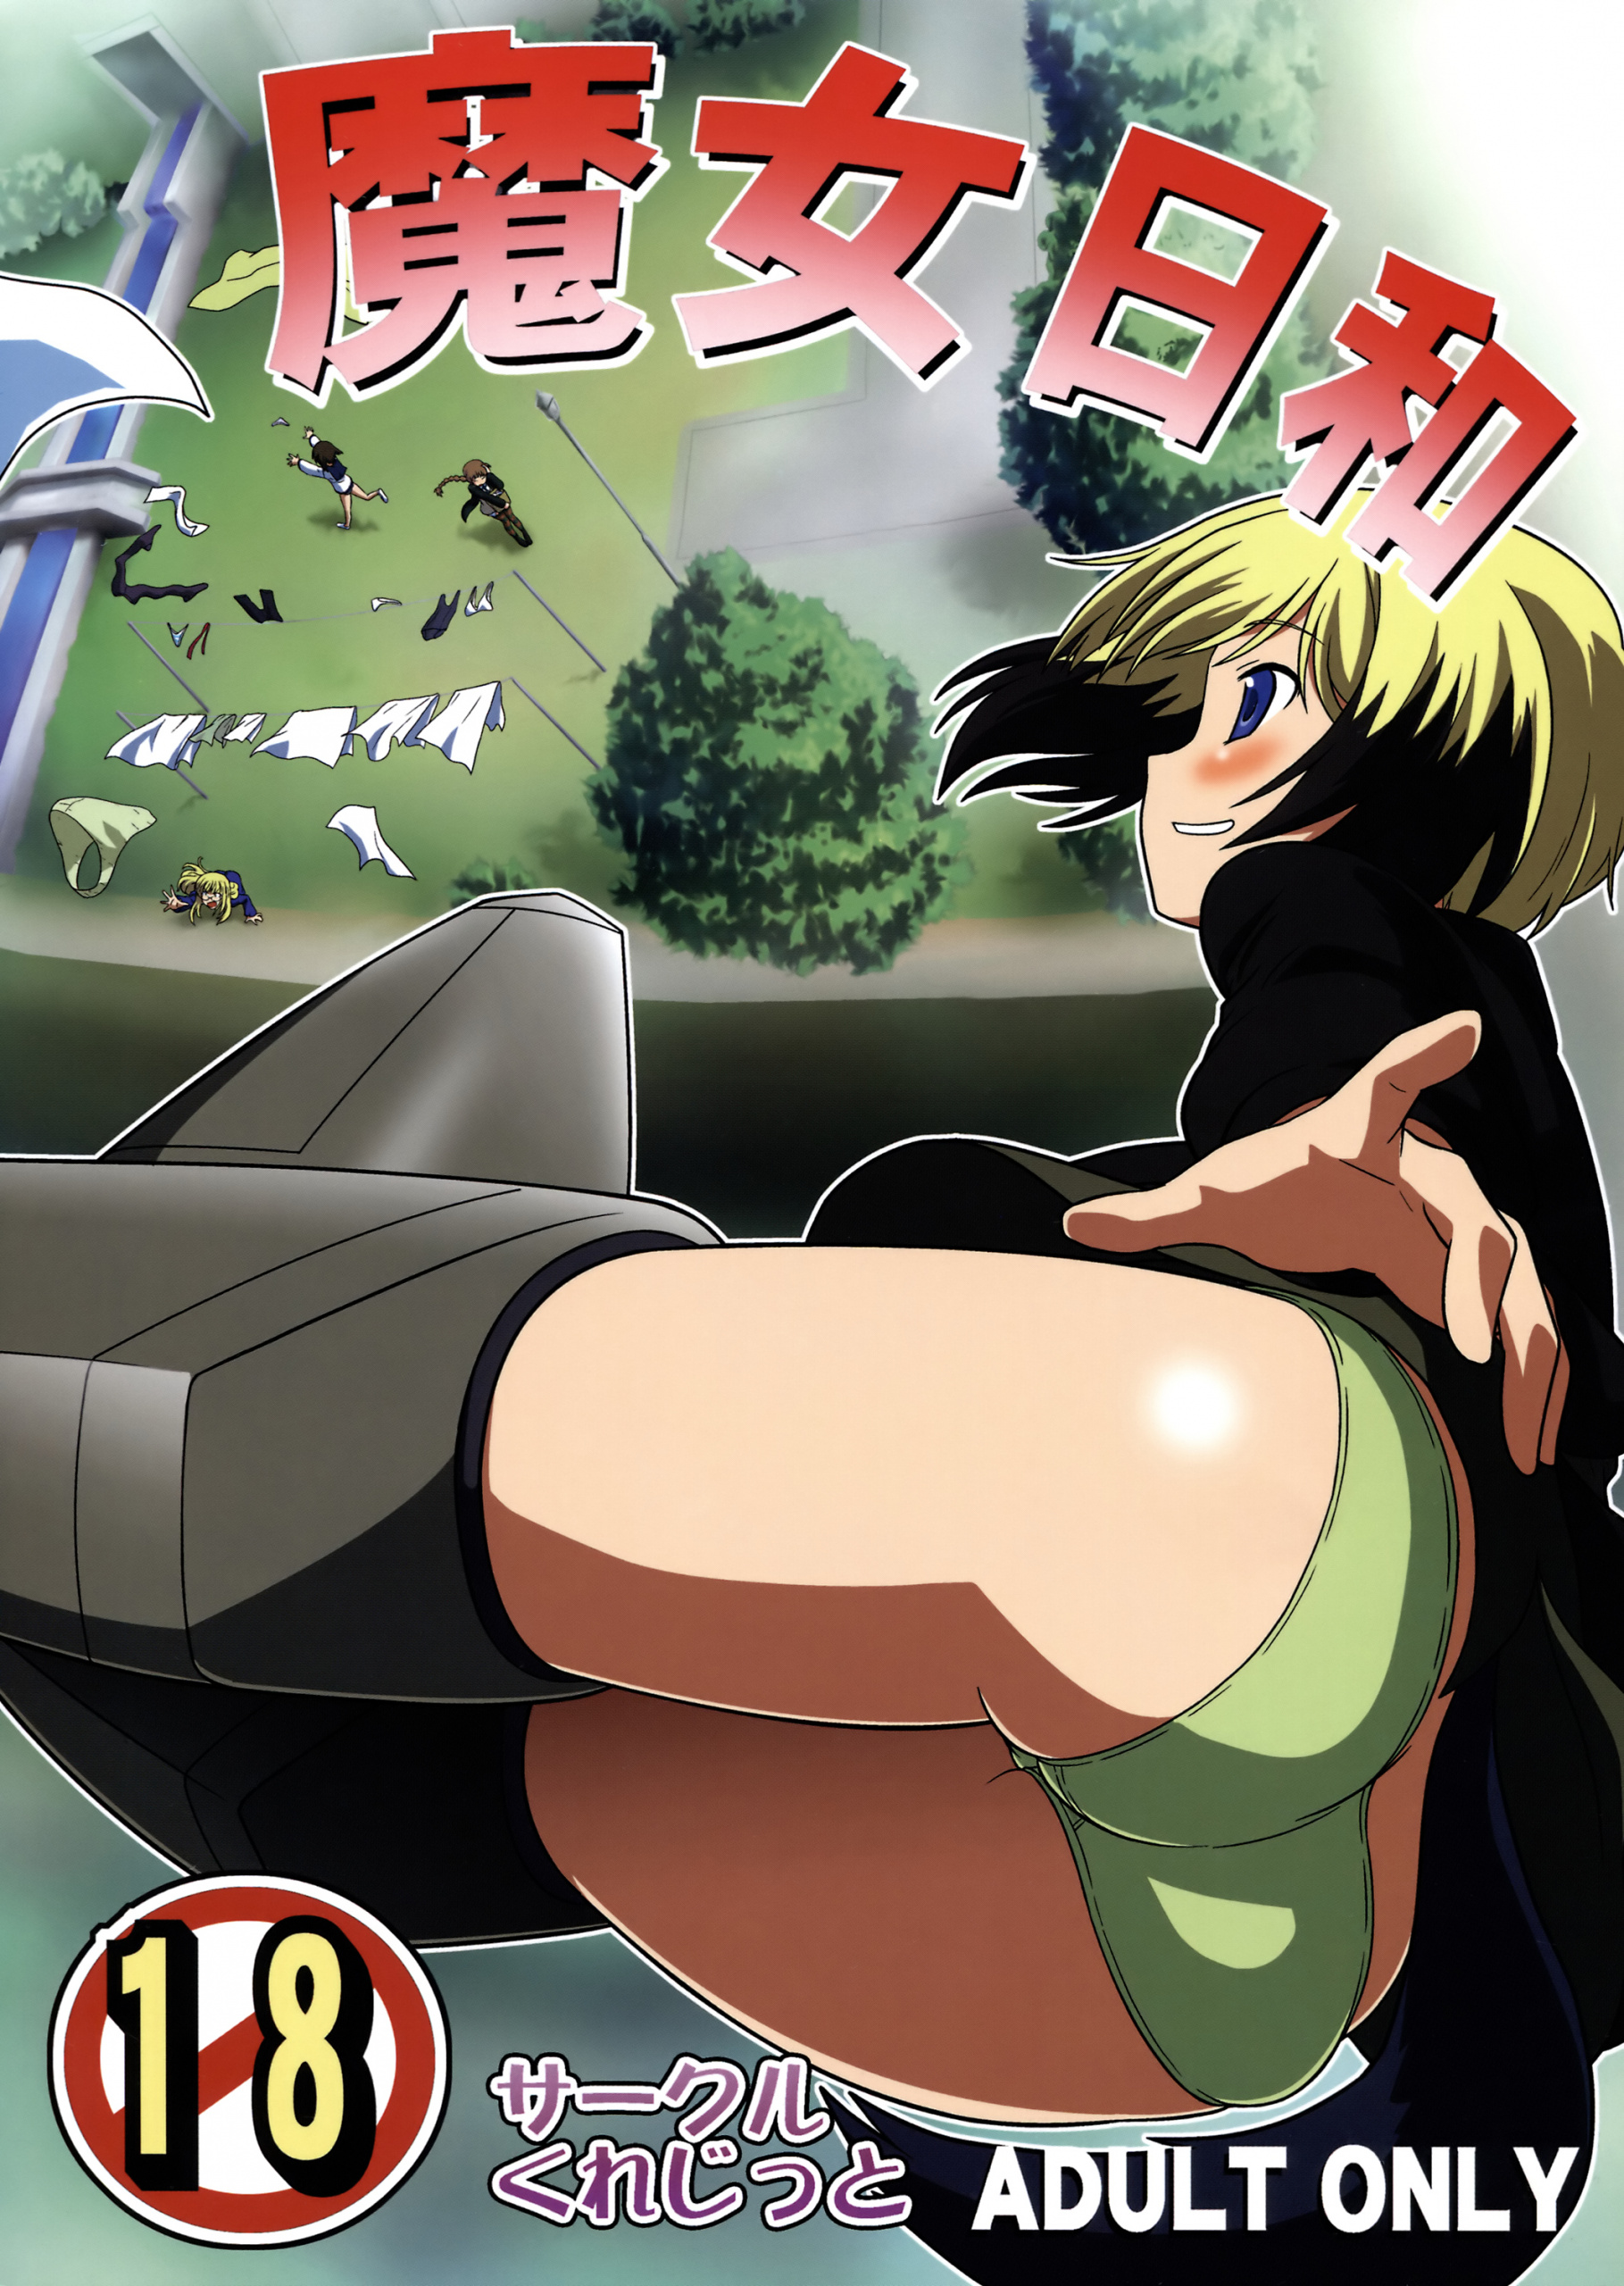 Busty Anime Lesbians Girls Cum - Yuri: Girls daily games - Multporn Comics & Hentai manga